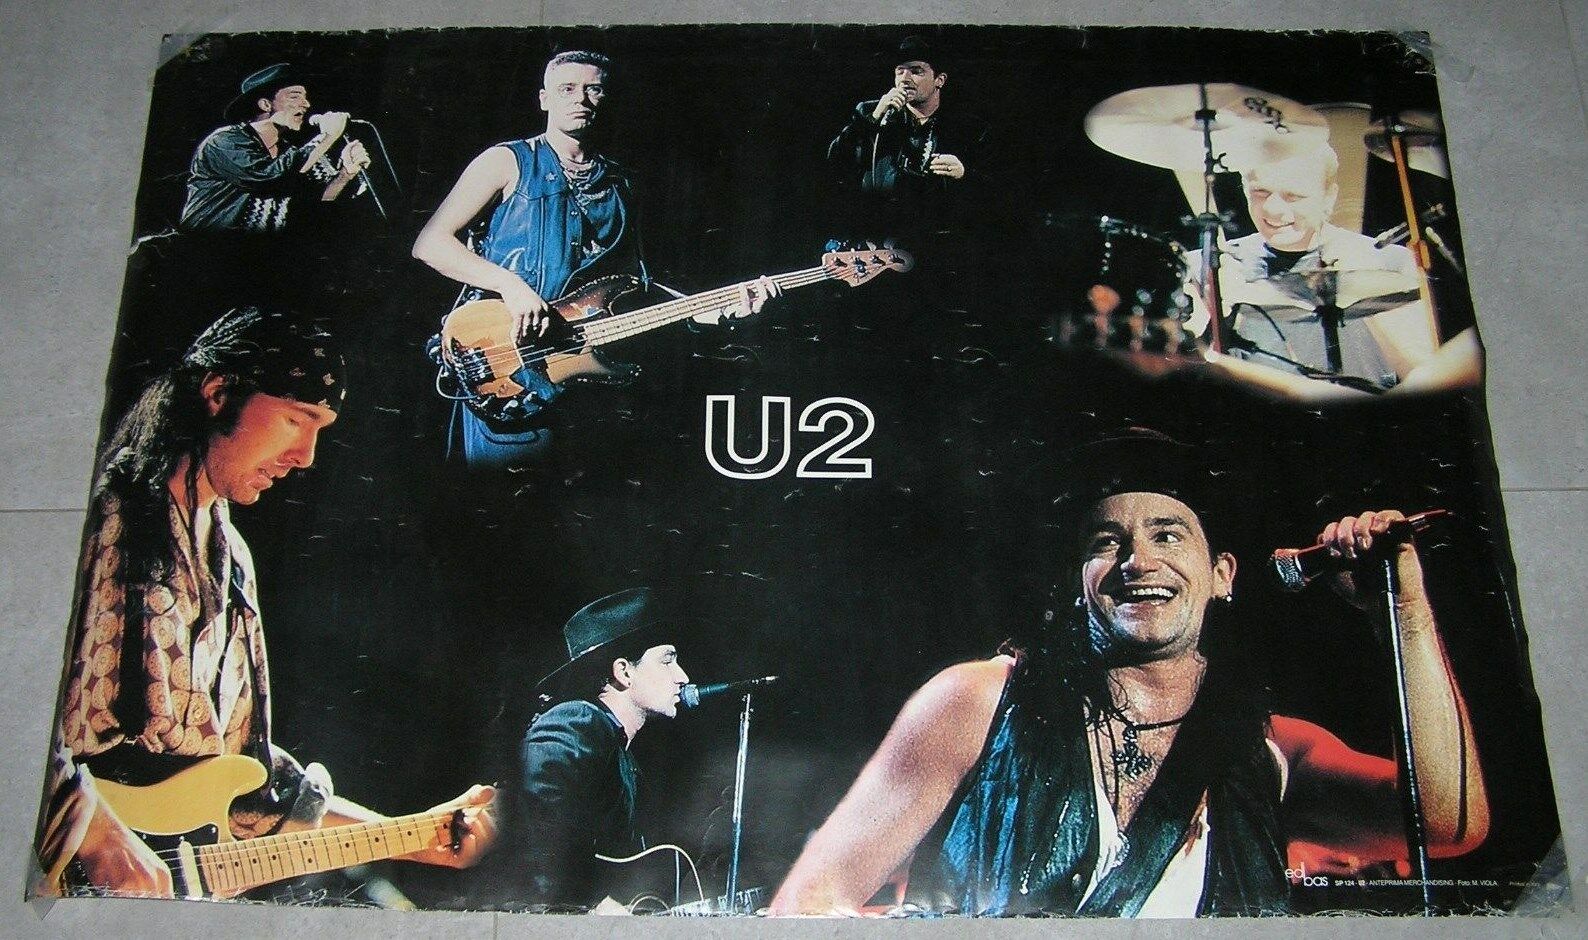 U2 Photo By M. Viola Original Official Huge Poster 39"x27" 1980s Printe In Italy